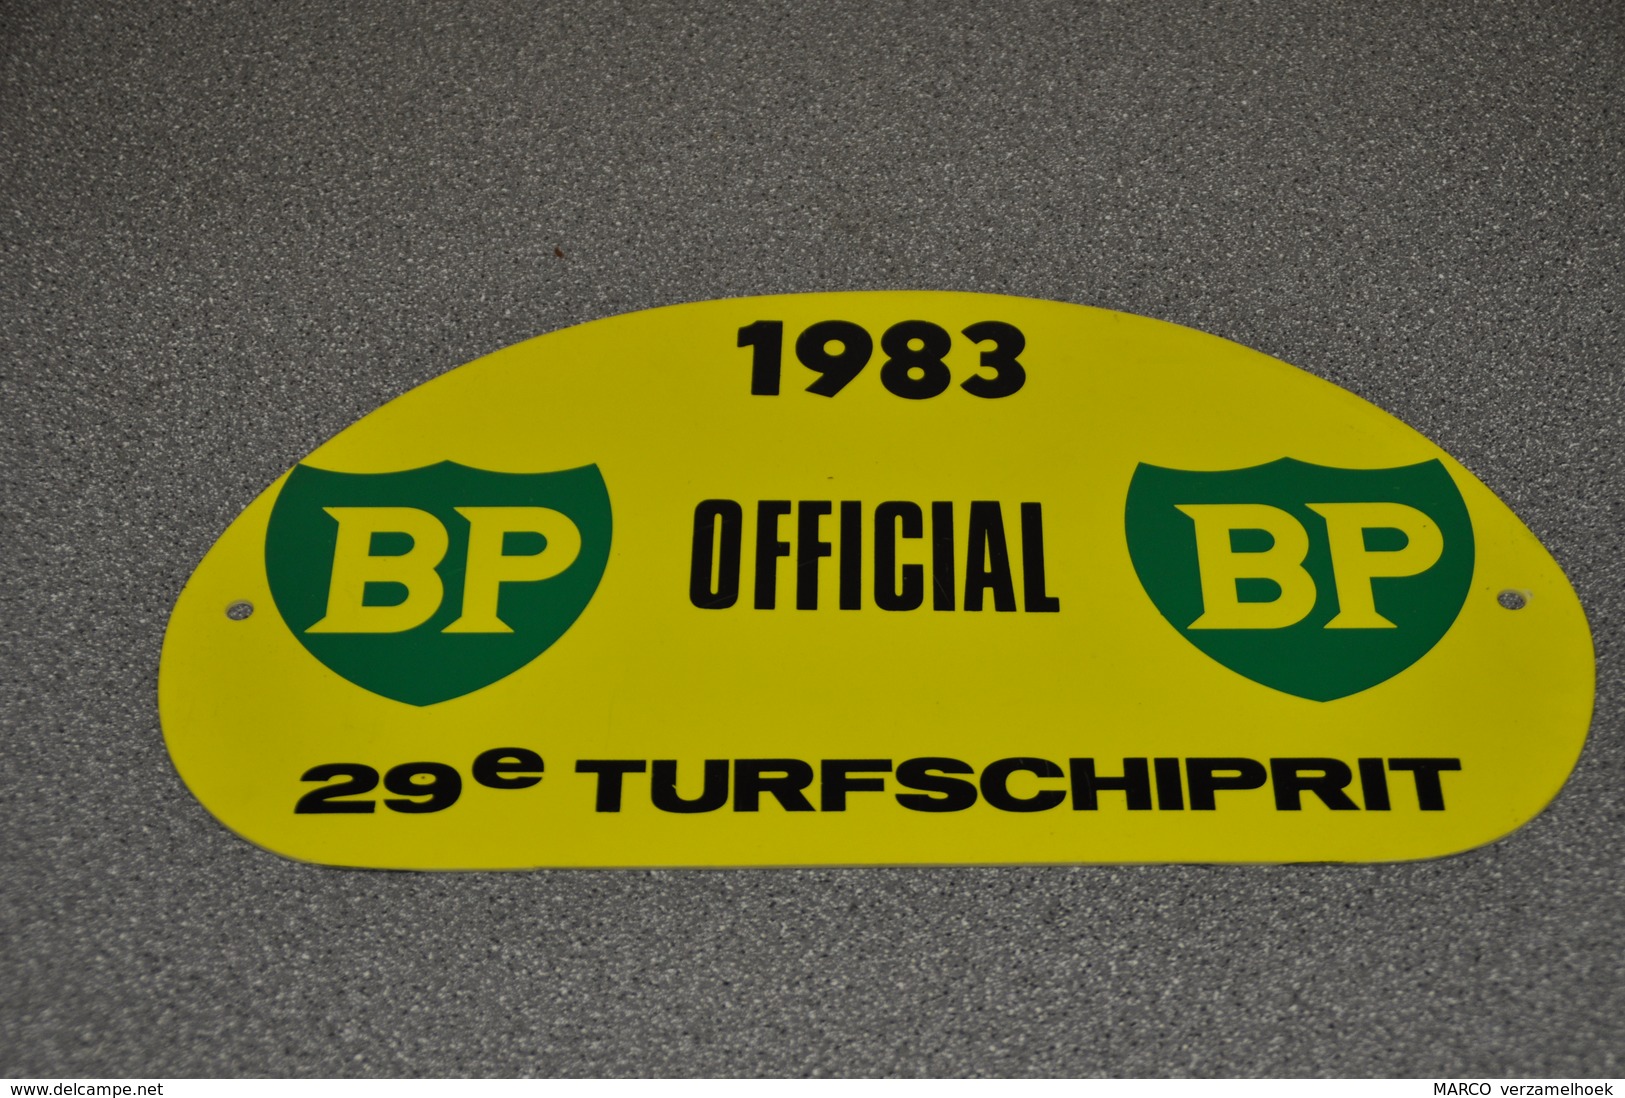 Rally Plaat-rallye Plaque Plastic: 29e Turfschiprit Breda 1983 OFFICIAL BP - Targhe Rallye